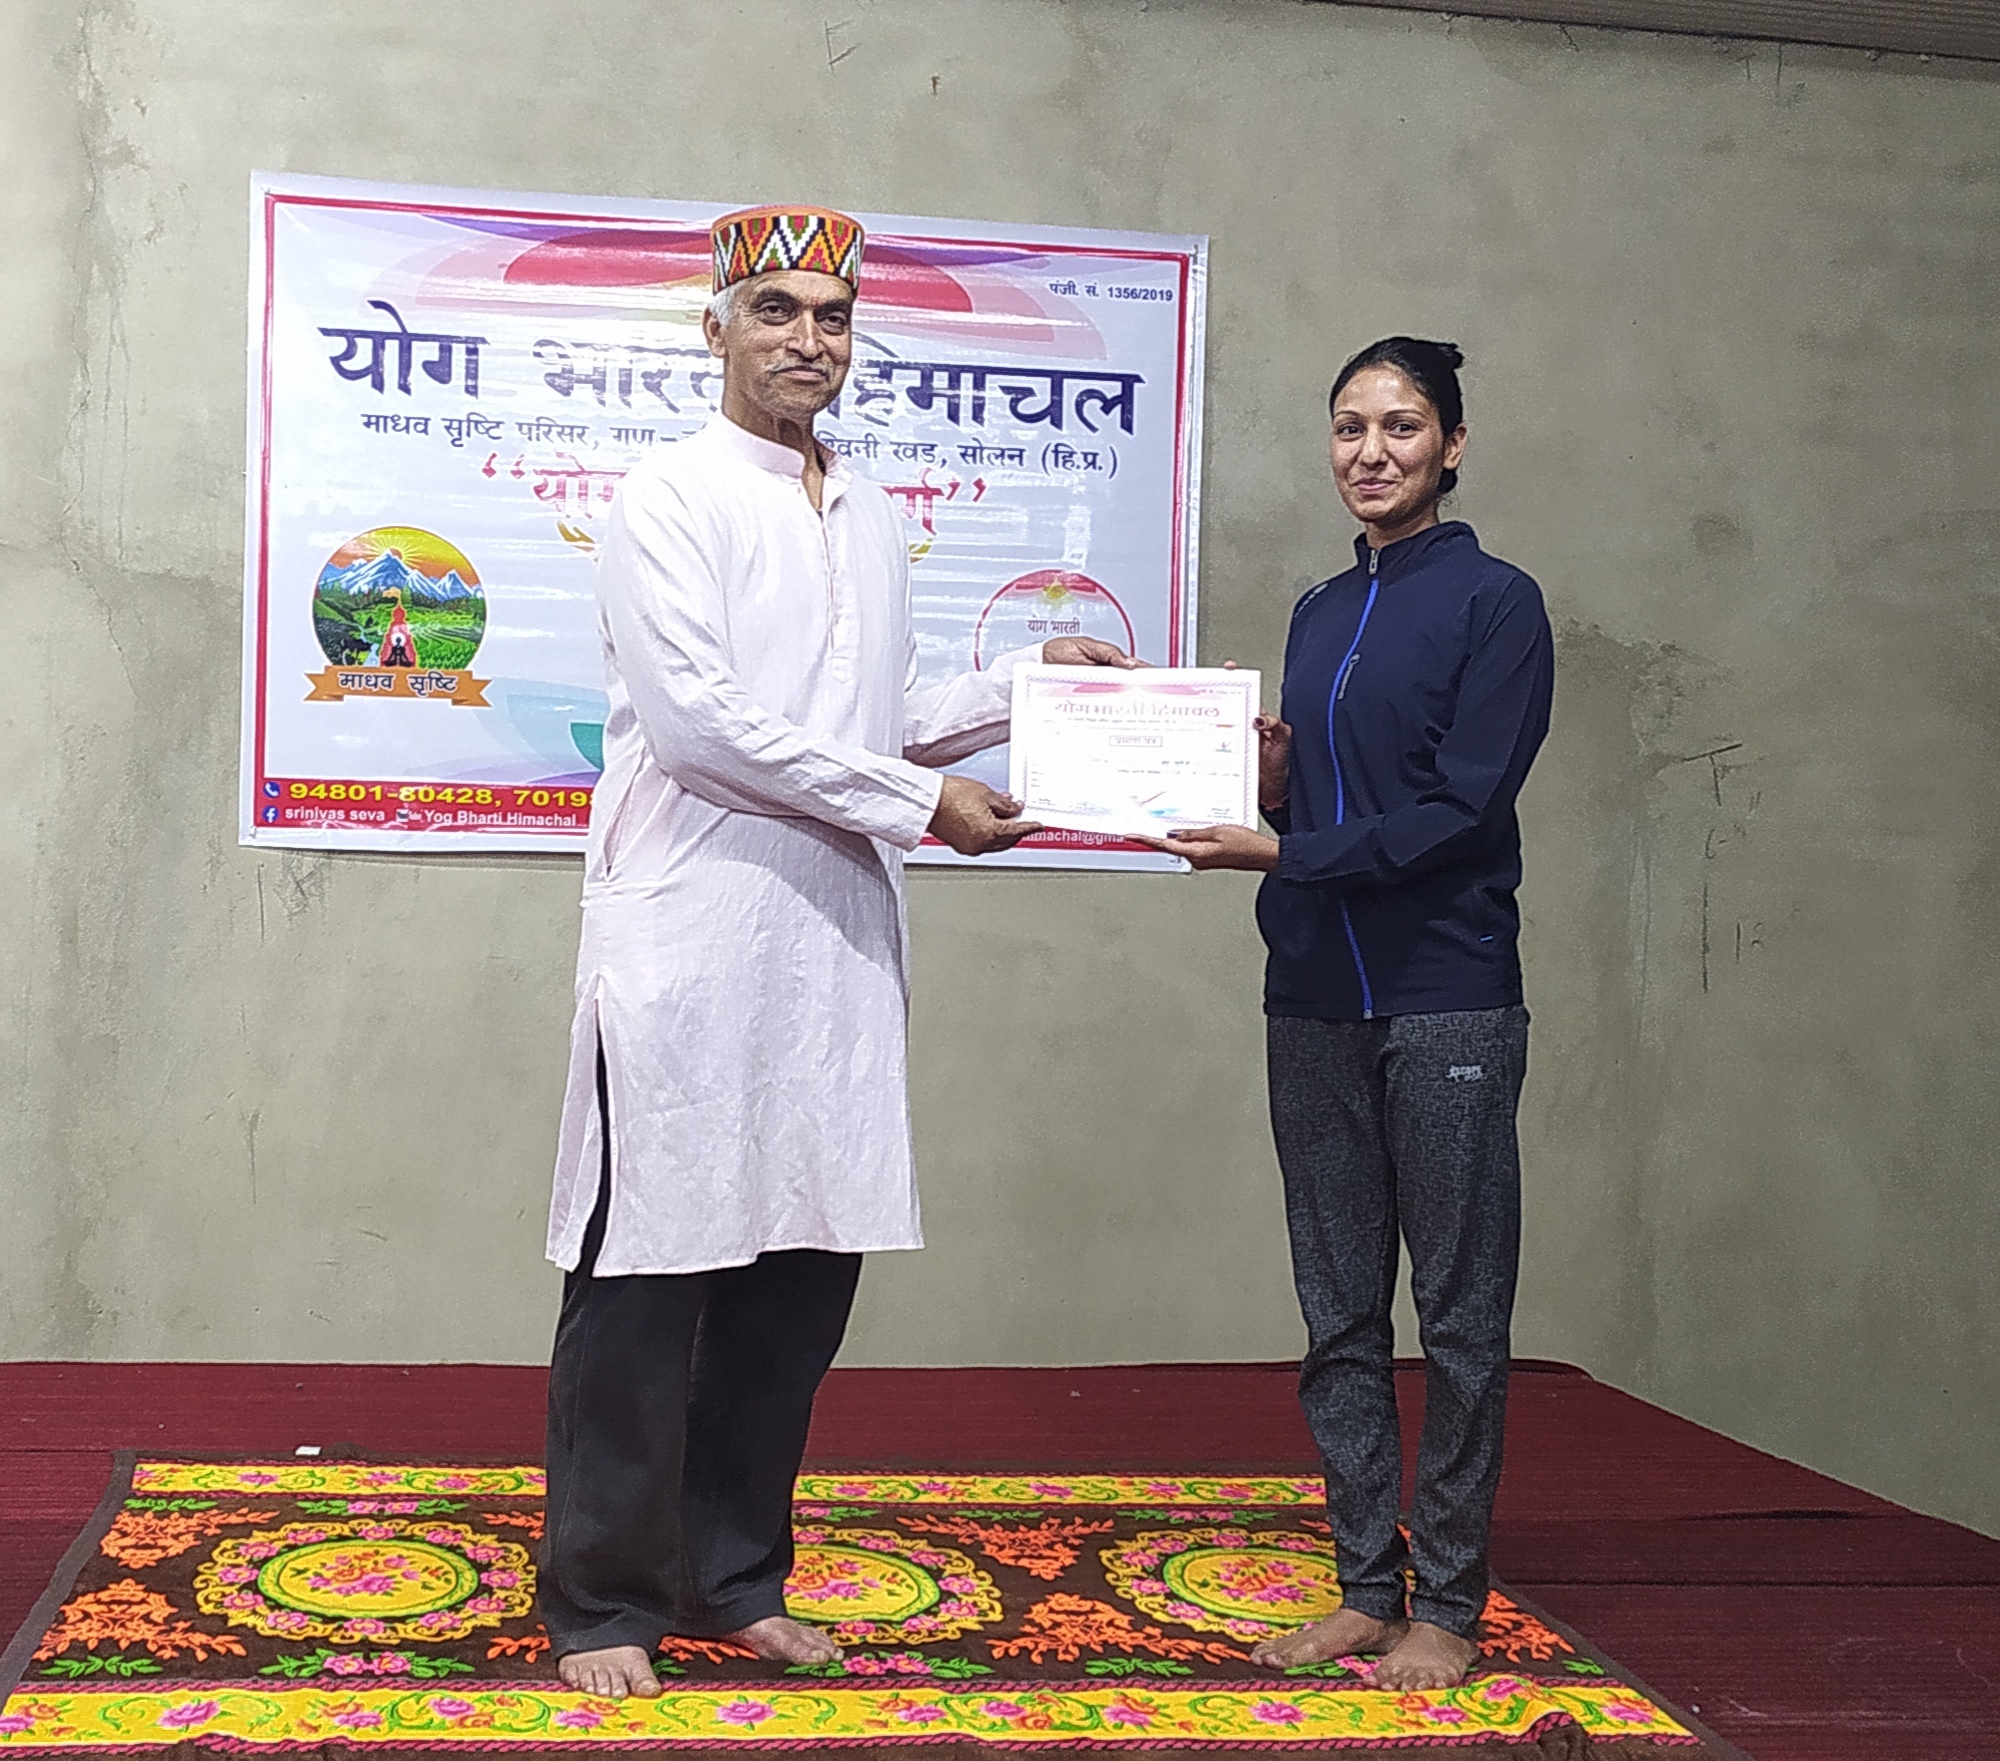 Priyanka goyal_Recieving certificate by Mr. Srinivas Murthy ji, Founder of Yoga Bharti